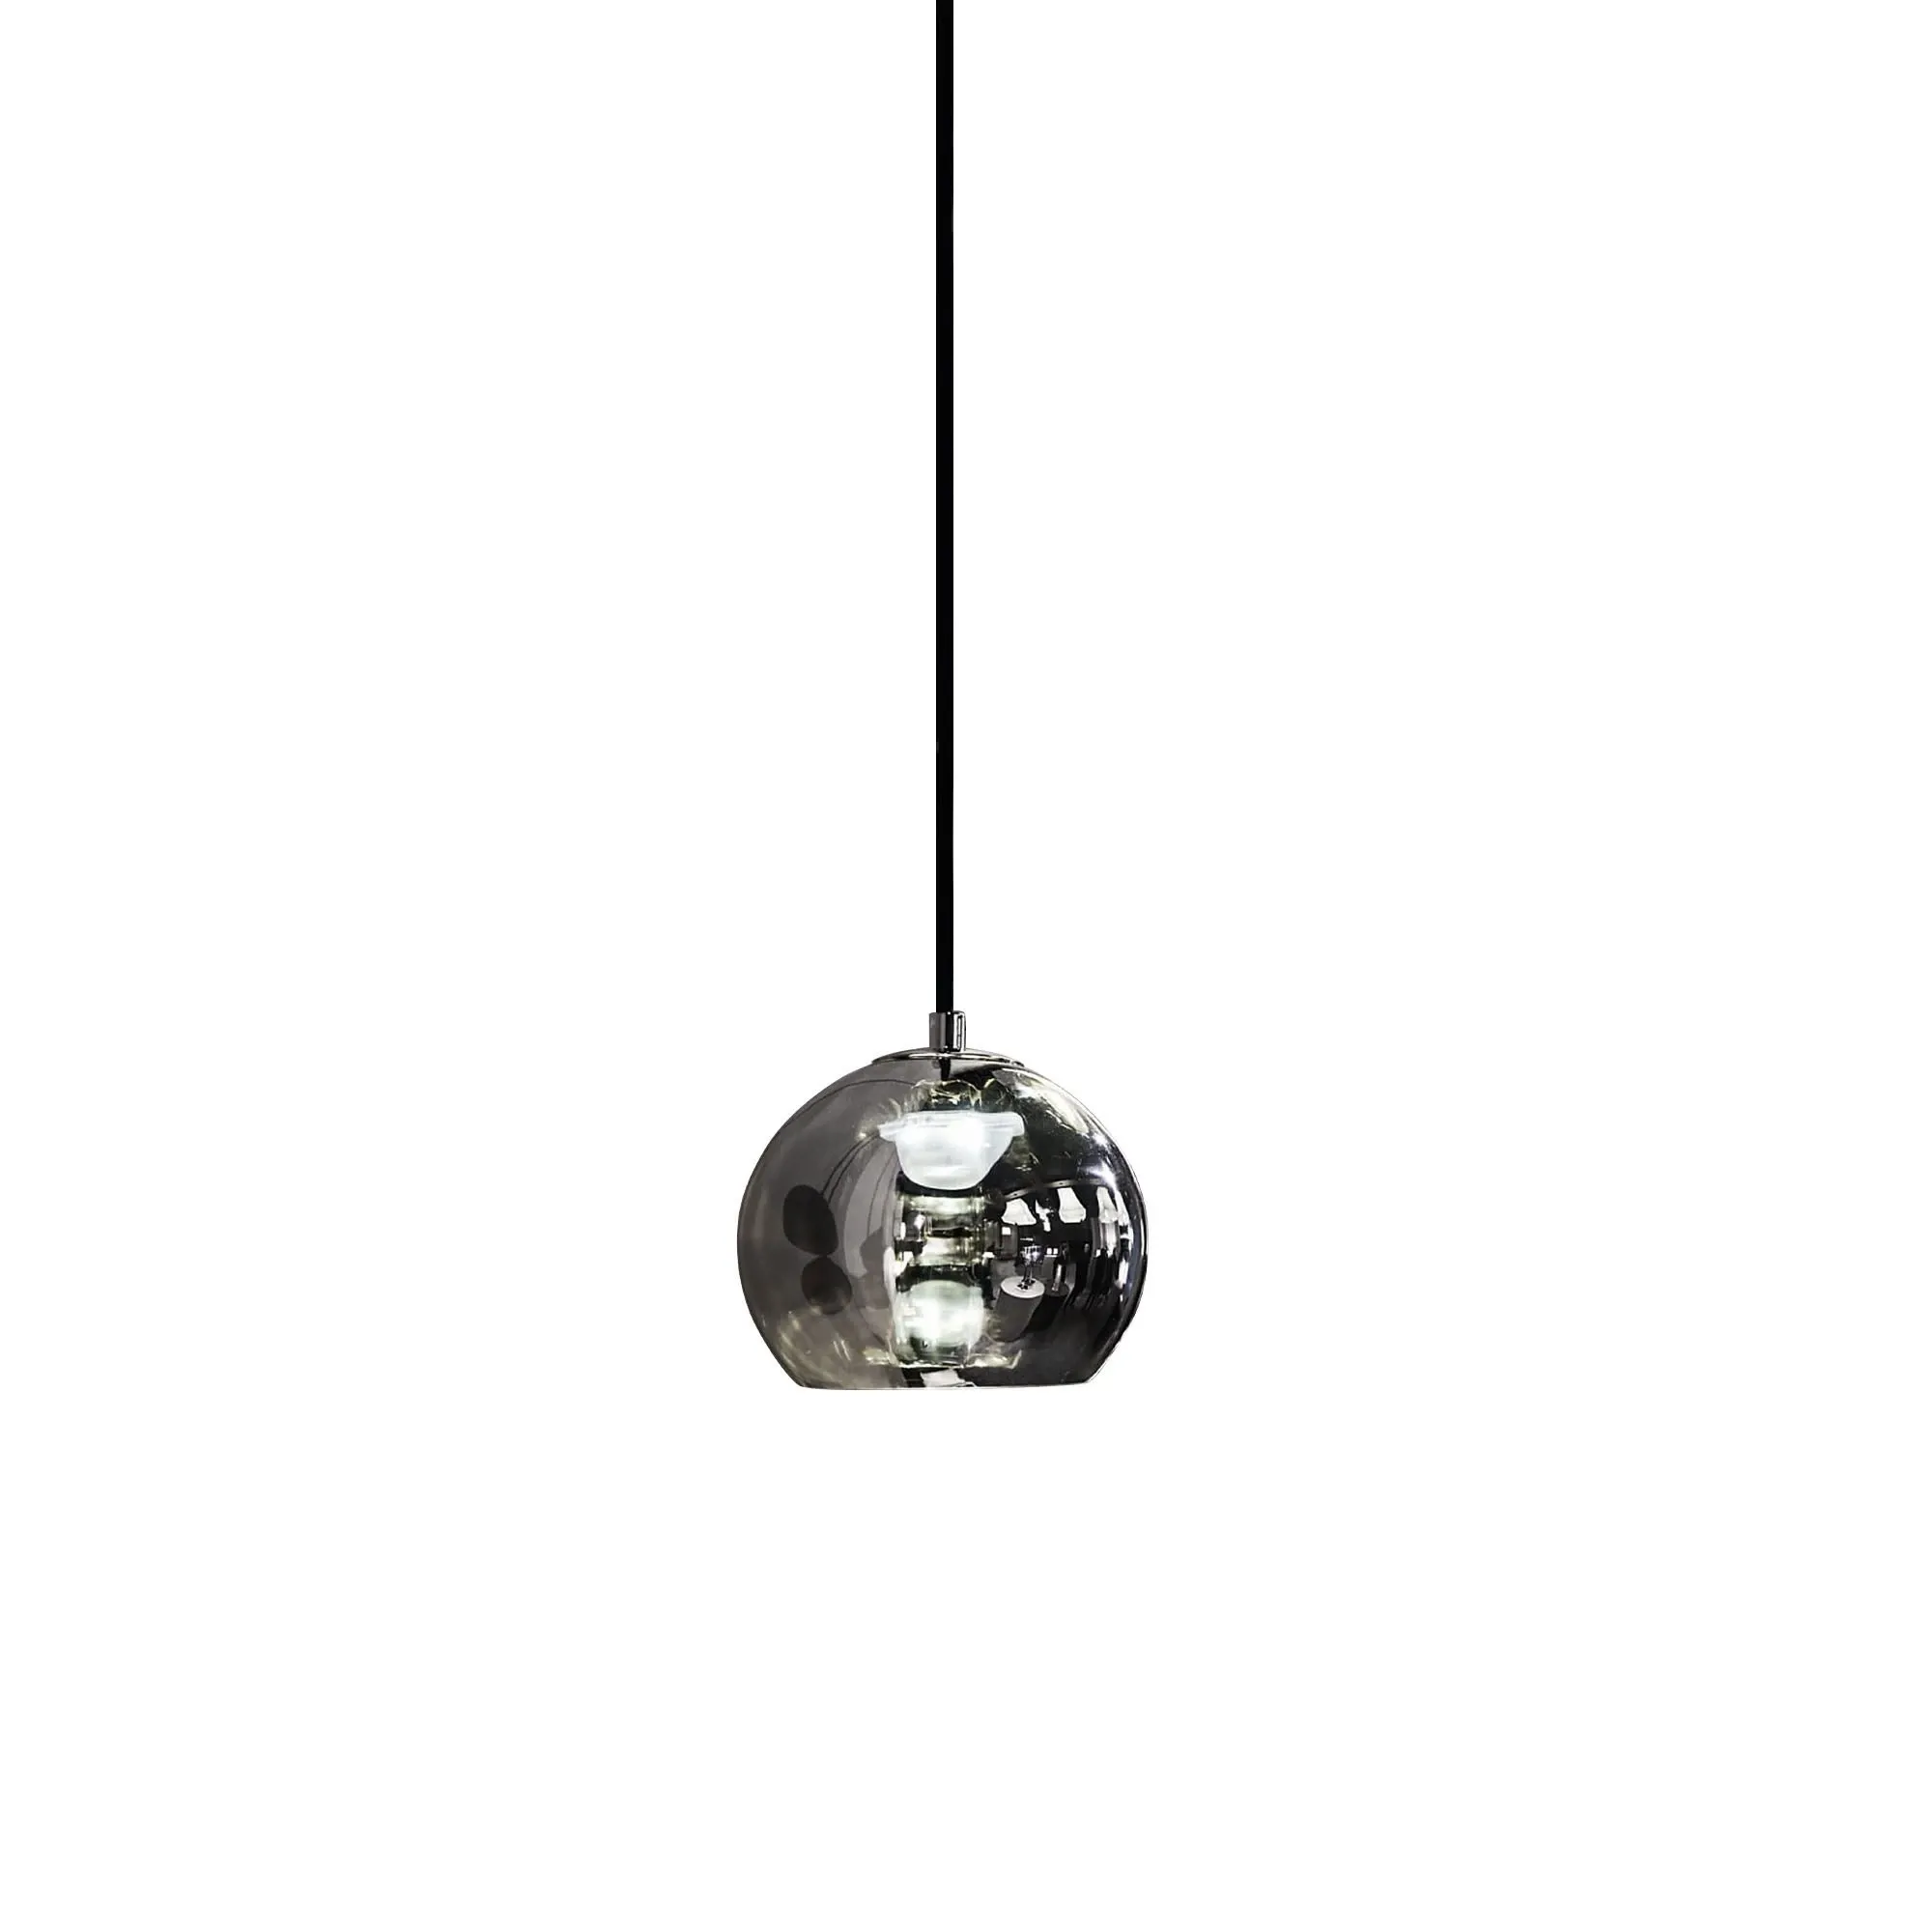 Kubric So Large pendant lamp with rosette, Contardi image